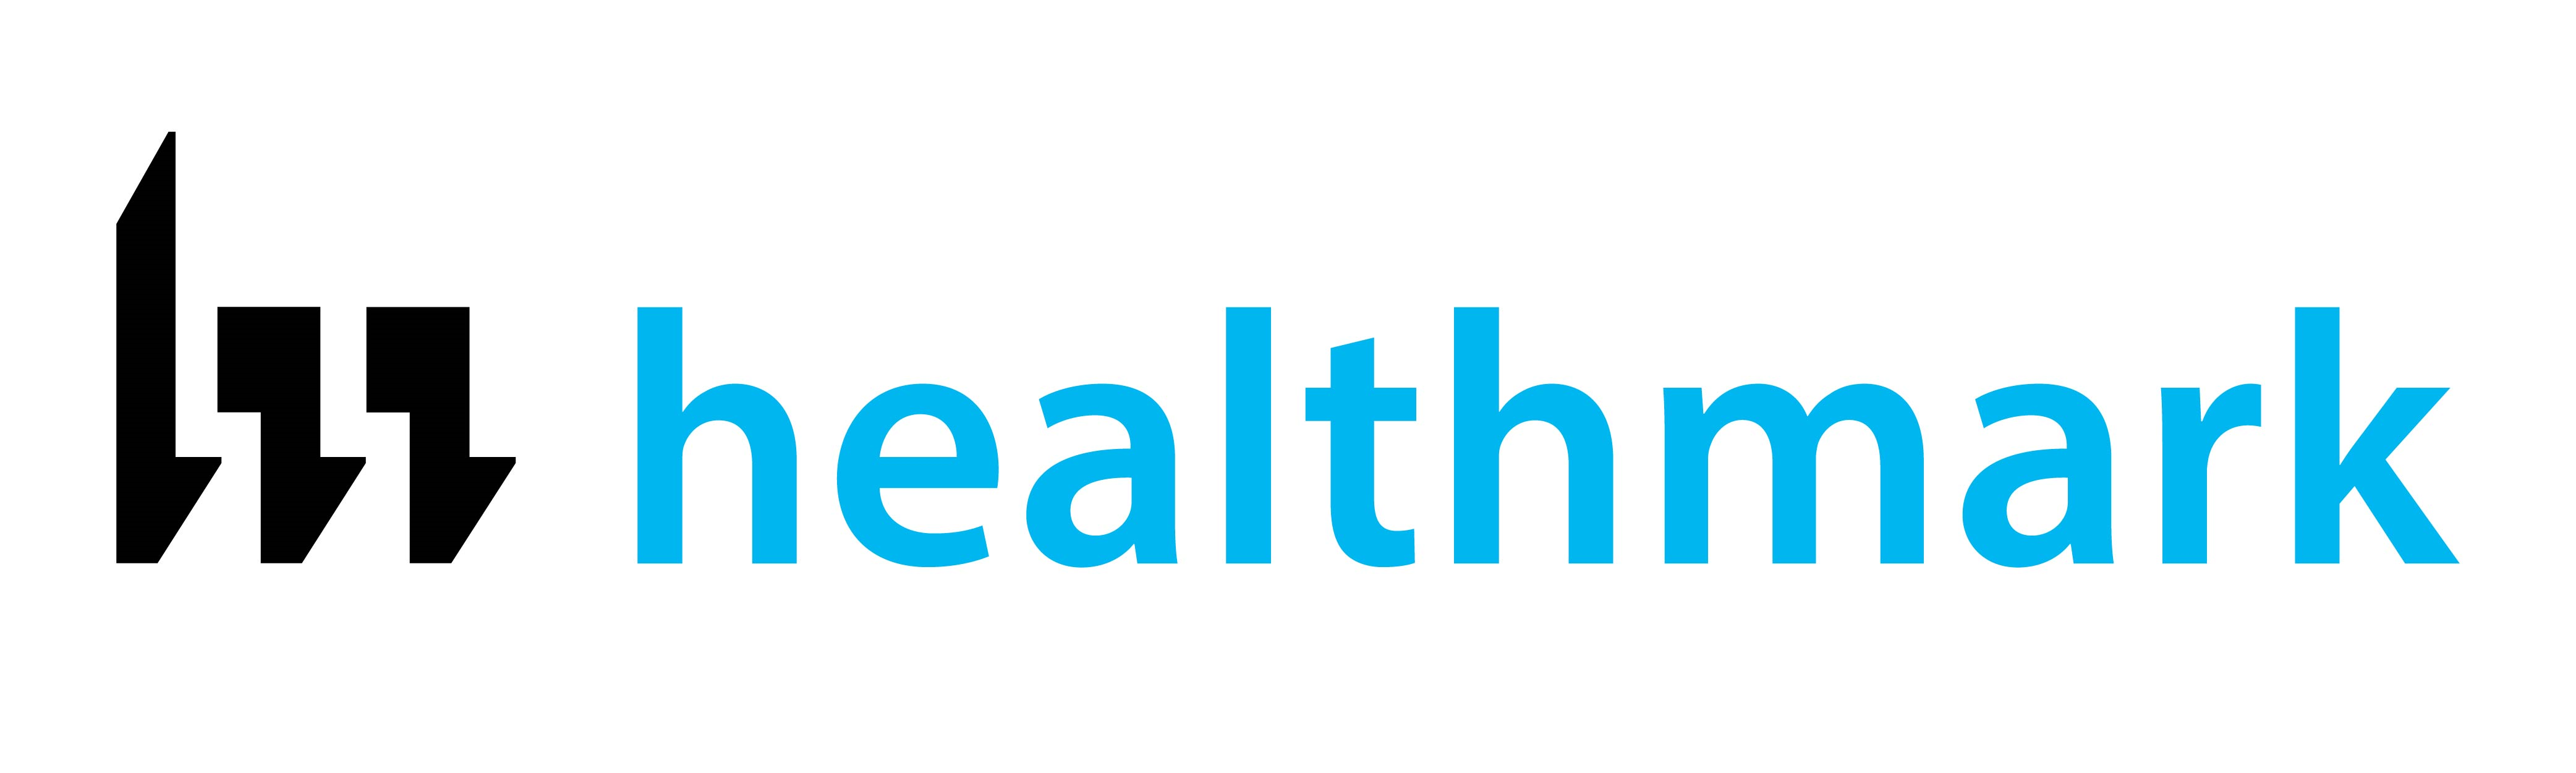 Healthmark Industries logo